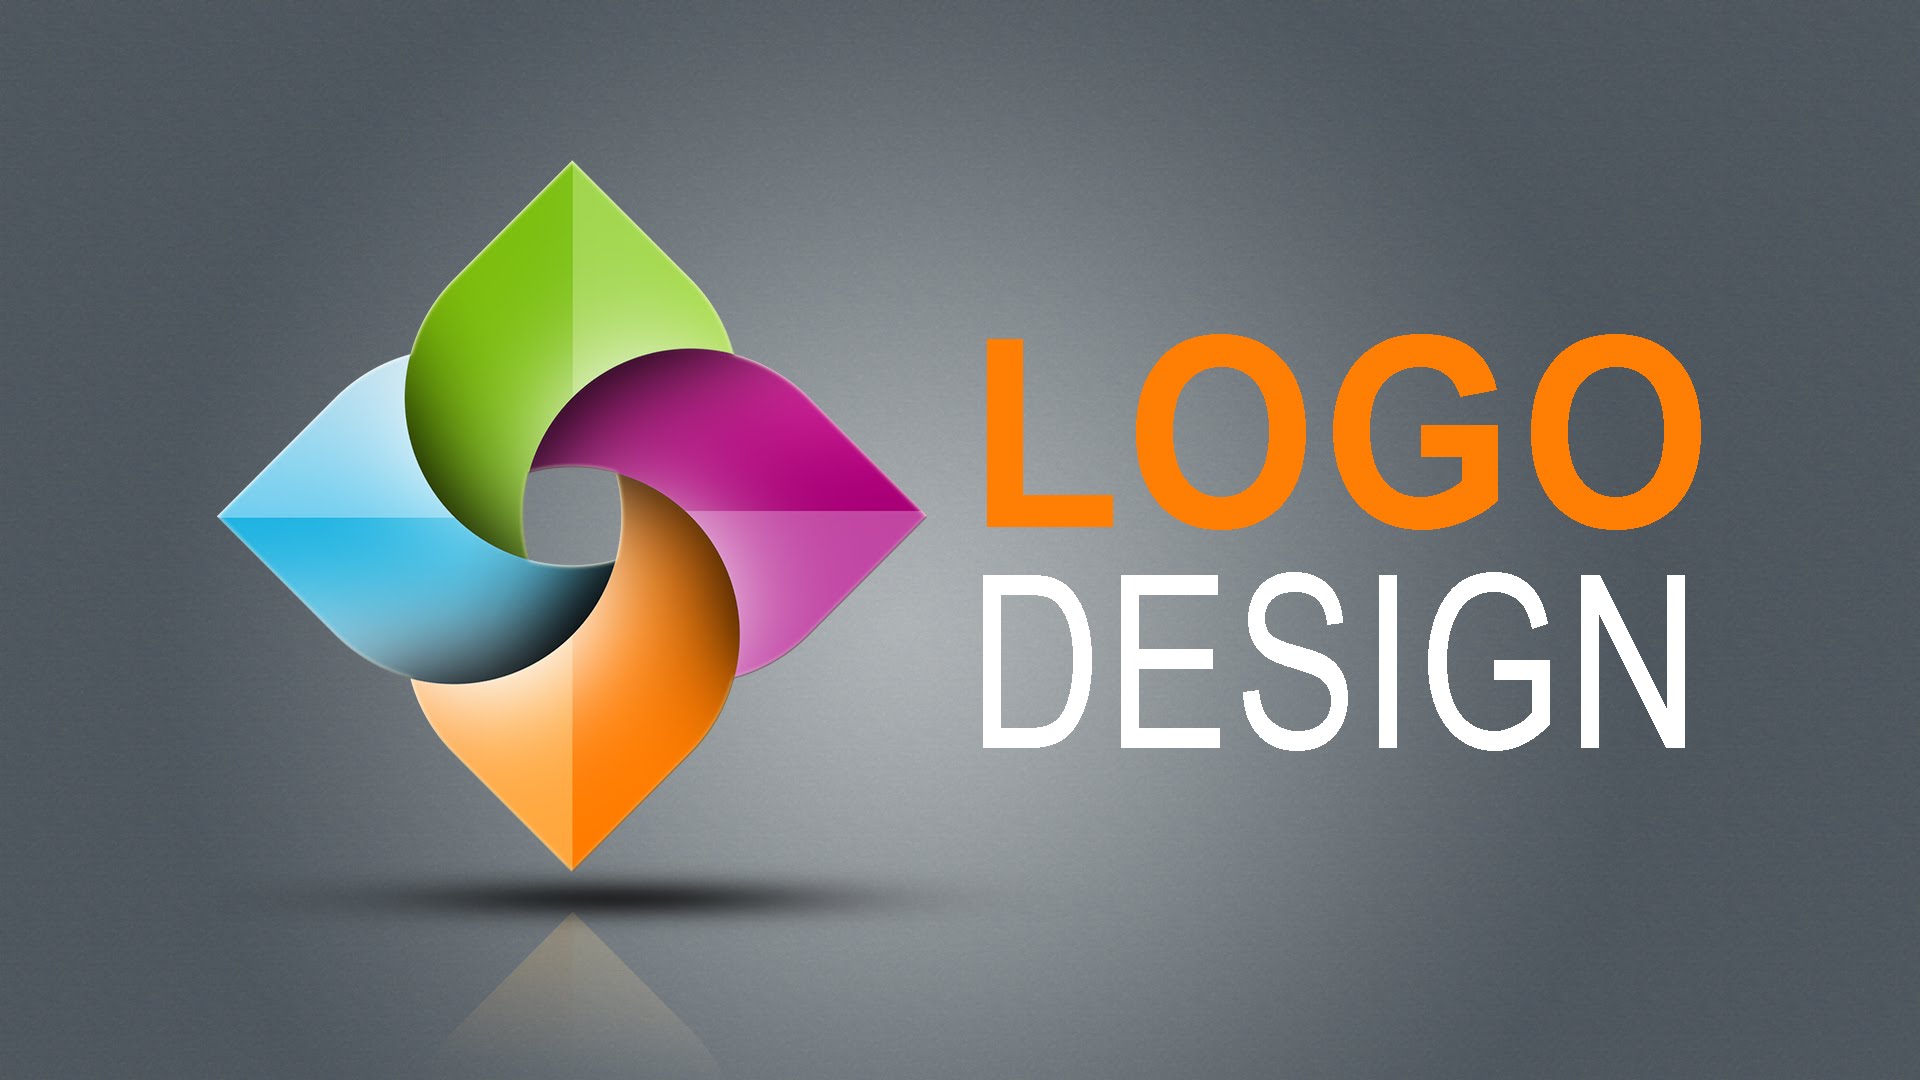 I Create Amazing Logos To Satisfy Clients Needs